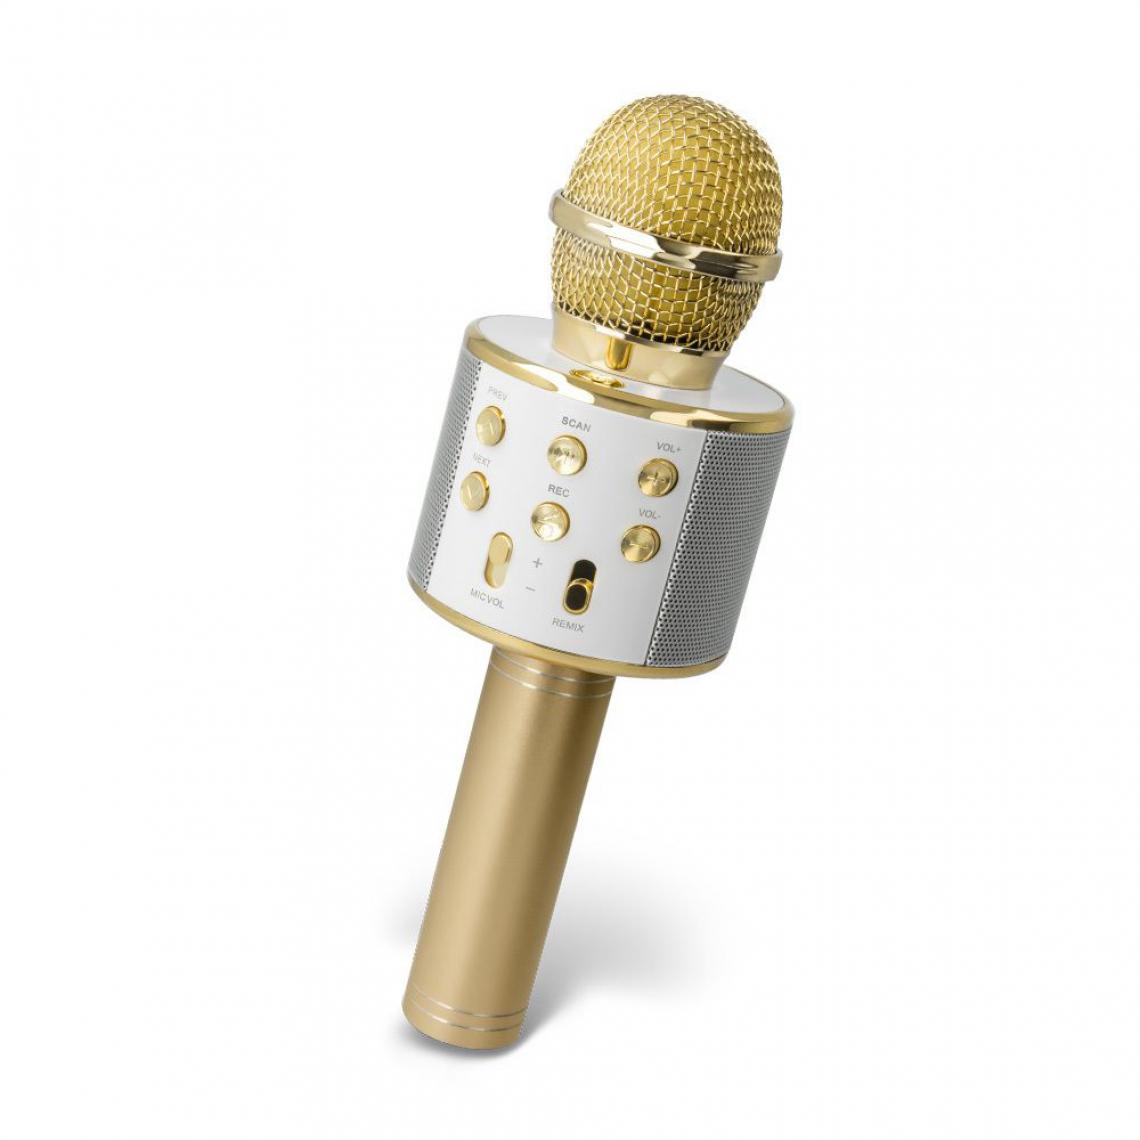 Ozzzo - Microphone Karaoke bluetooth haut parleur ozzzo Gold Or pour HUAWEI P20 Lite - Autres accessoires smartphone